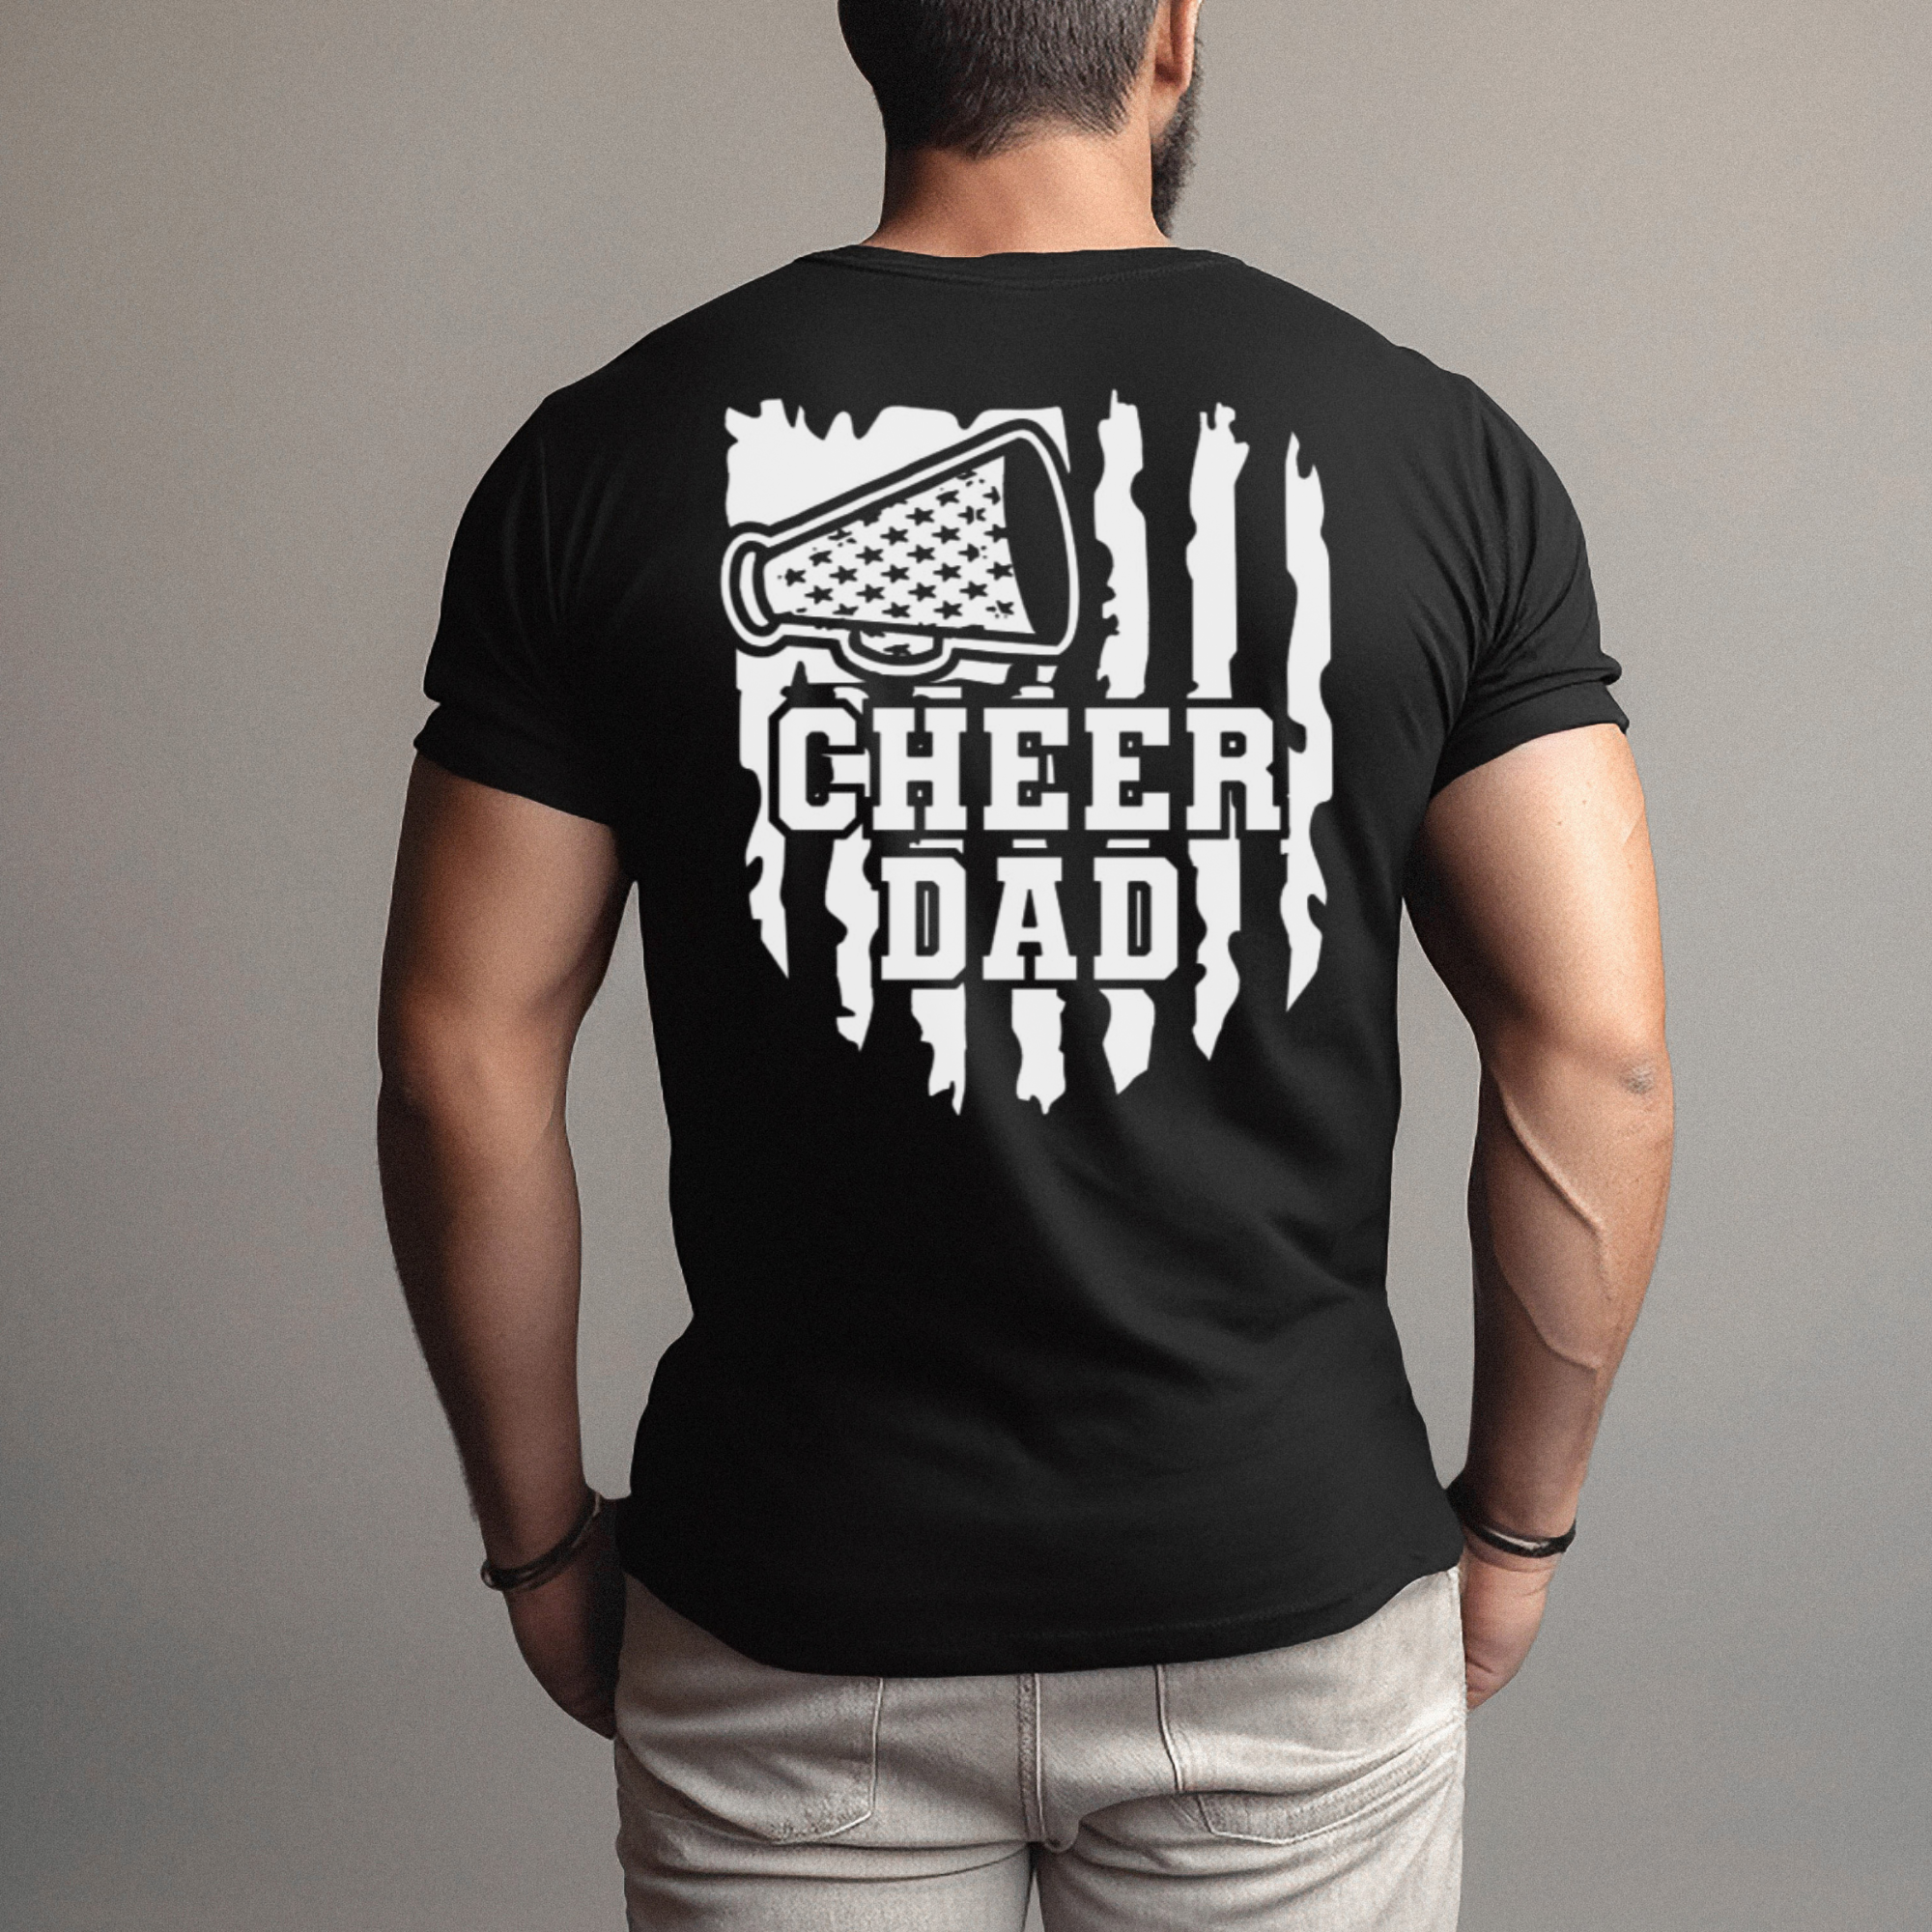 American Flag Cheer Dad Shirt: – & Cheerleading LuLu for Grace Accessories Apparel